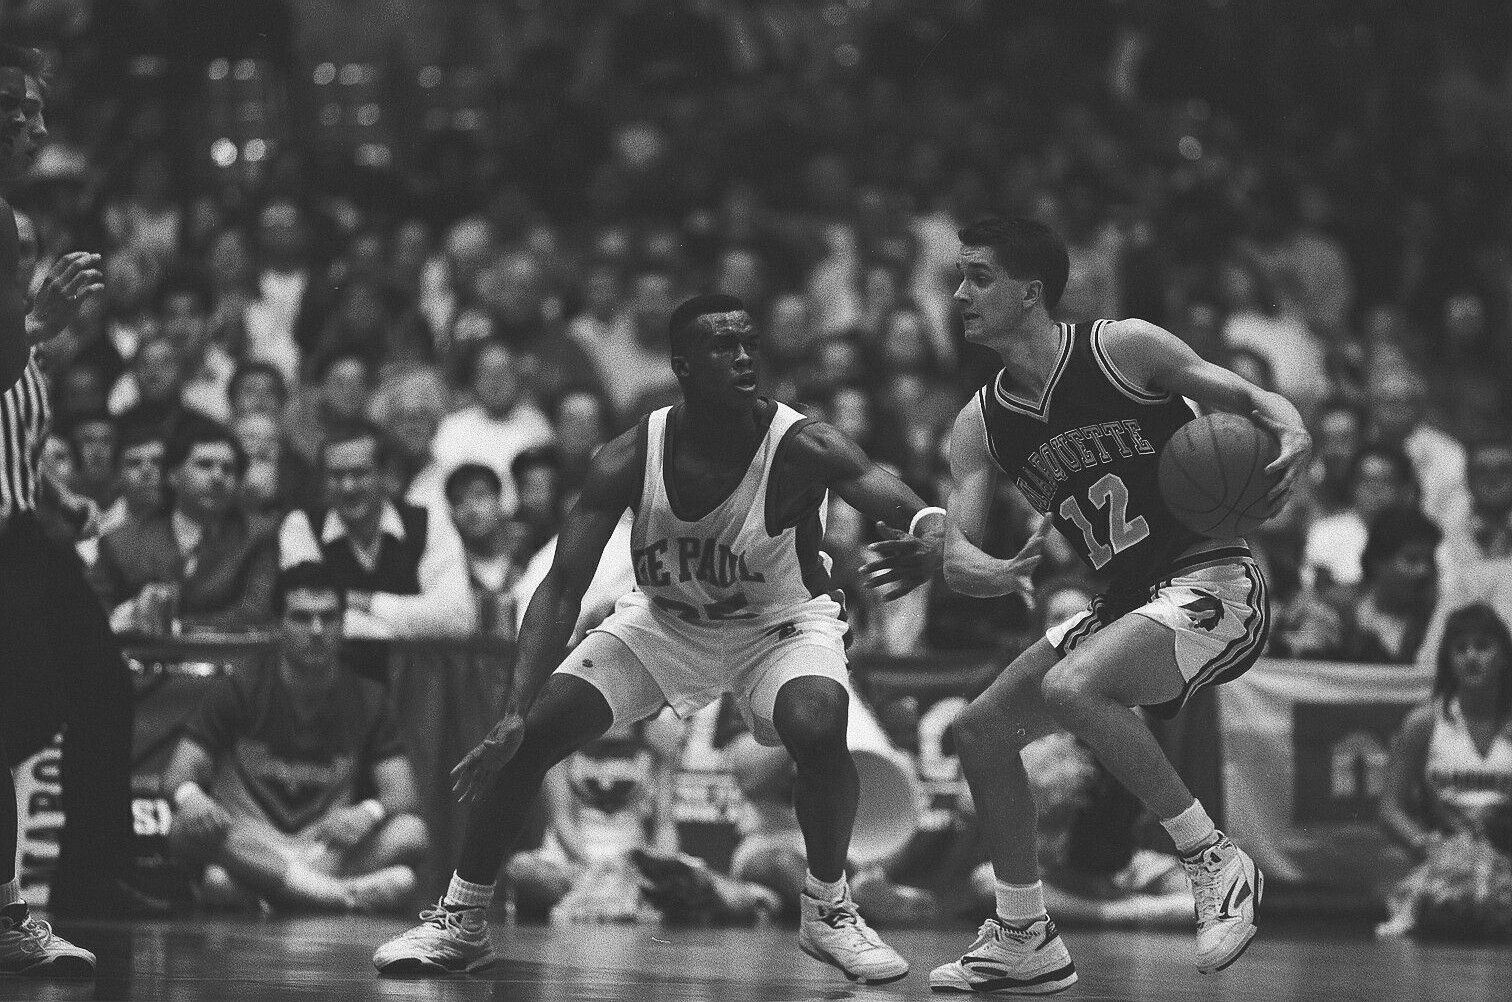 LD126-15 1992 College Basketball DePaul Marquette (140) ORIG 35mm B&W NEGATIVES Без бренда